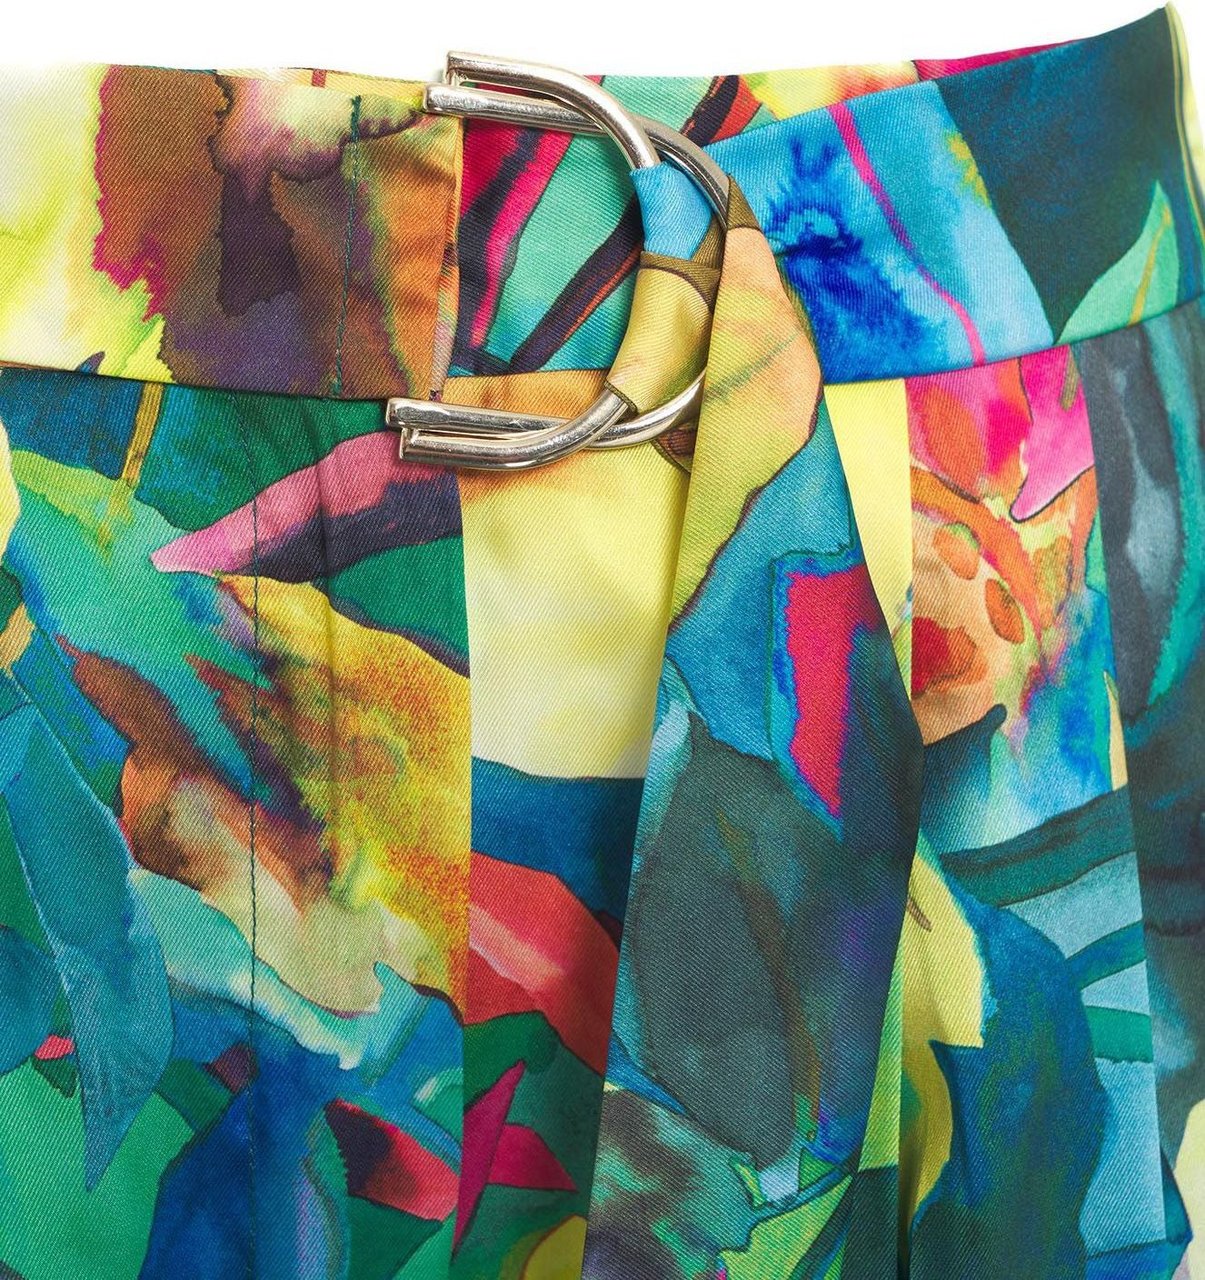 Liu Jo Cargo pants with floral print Divers